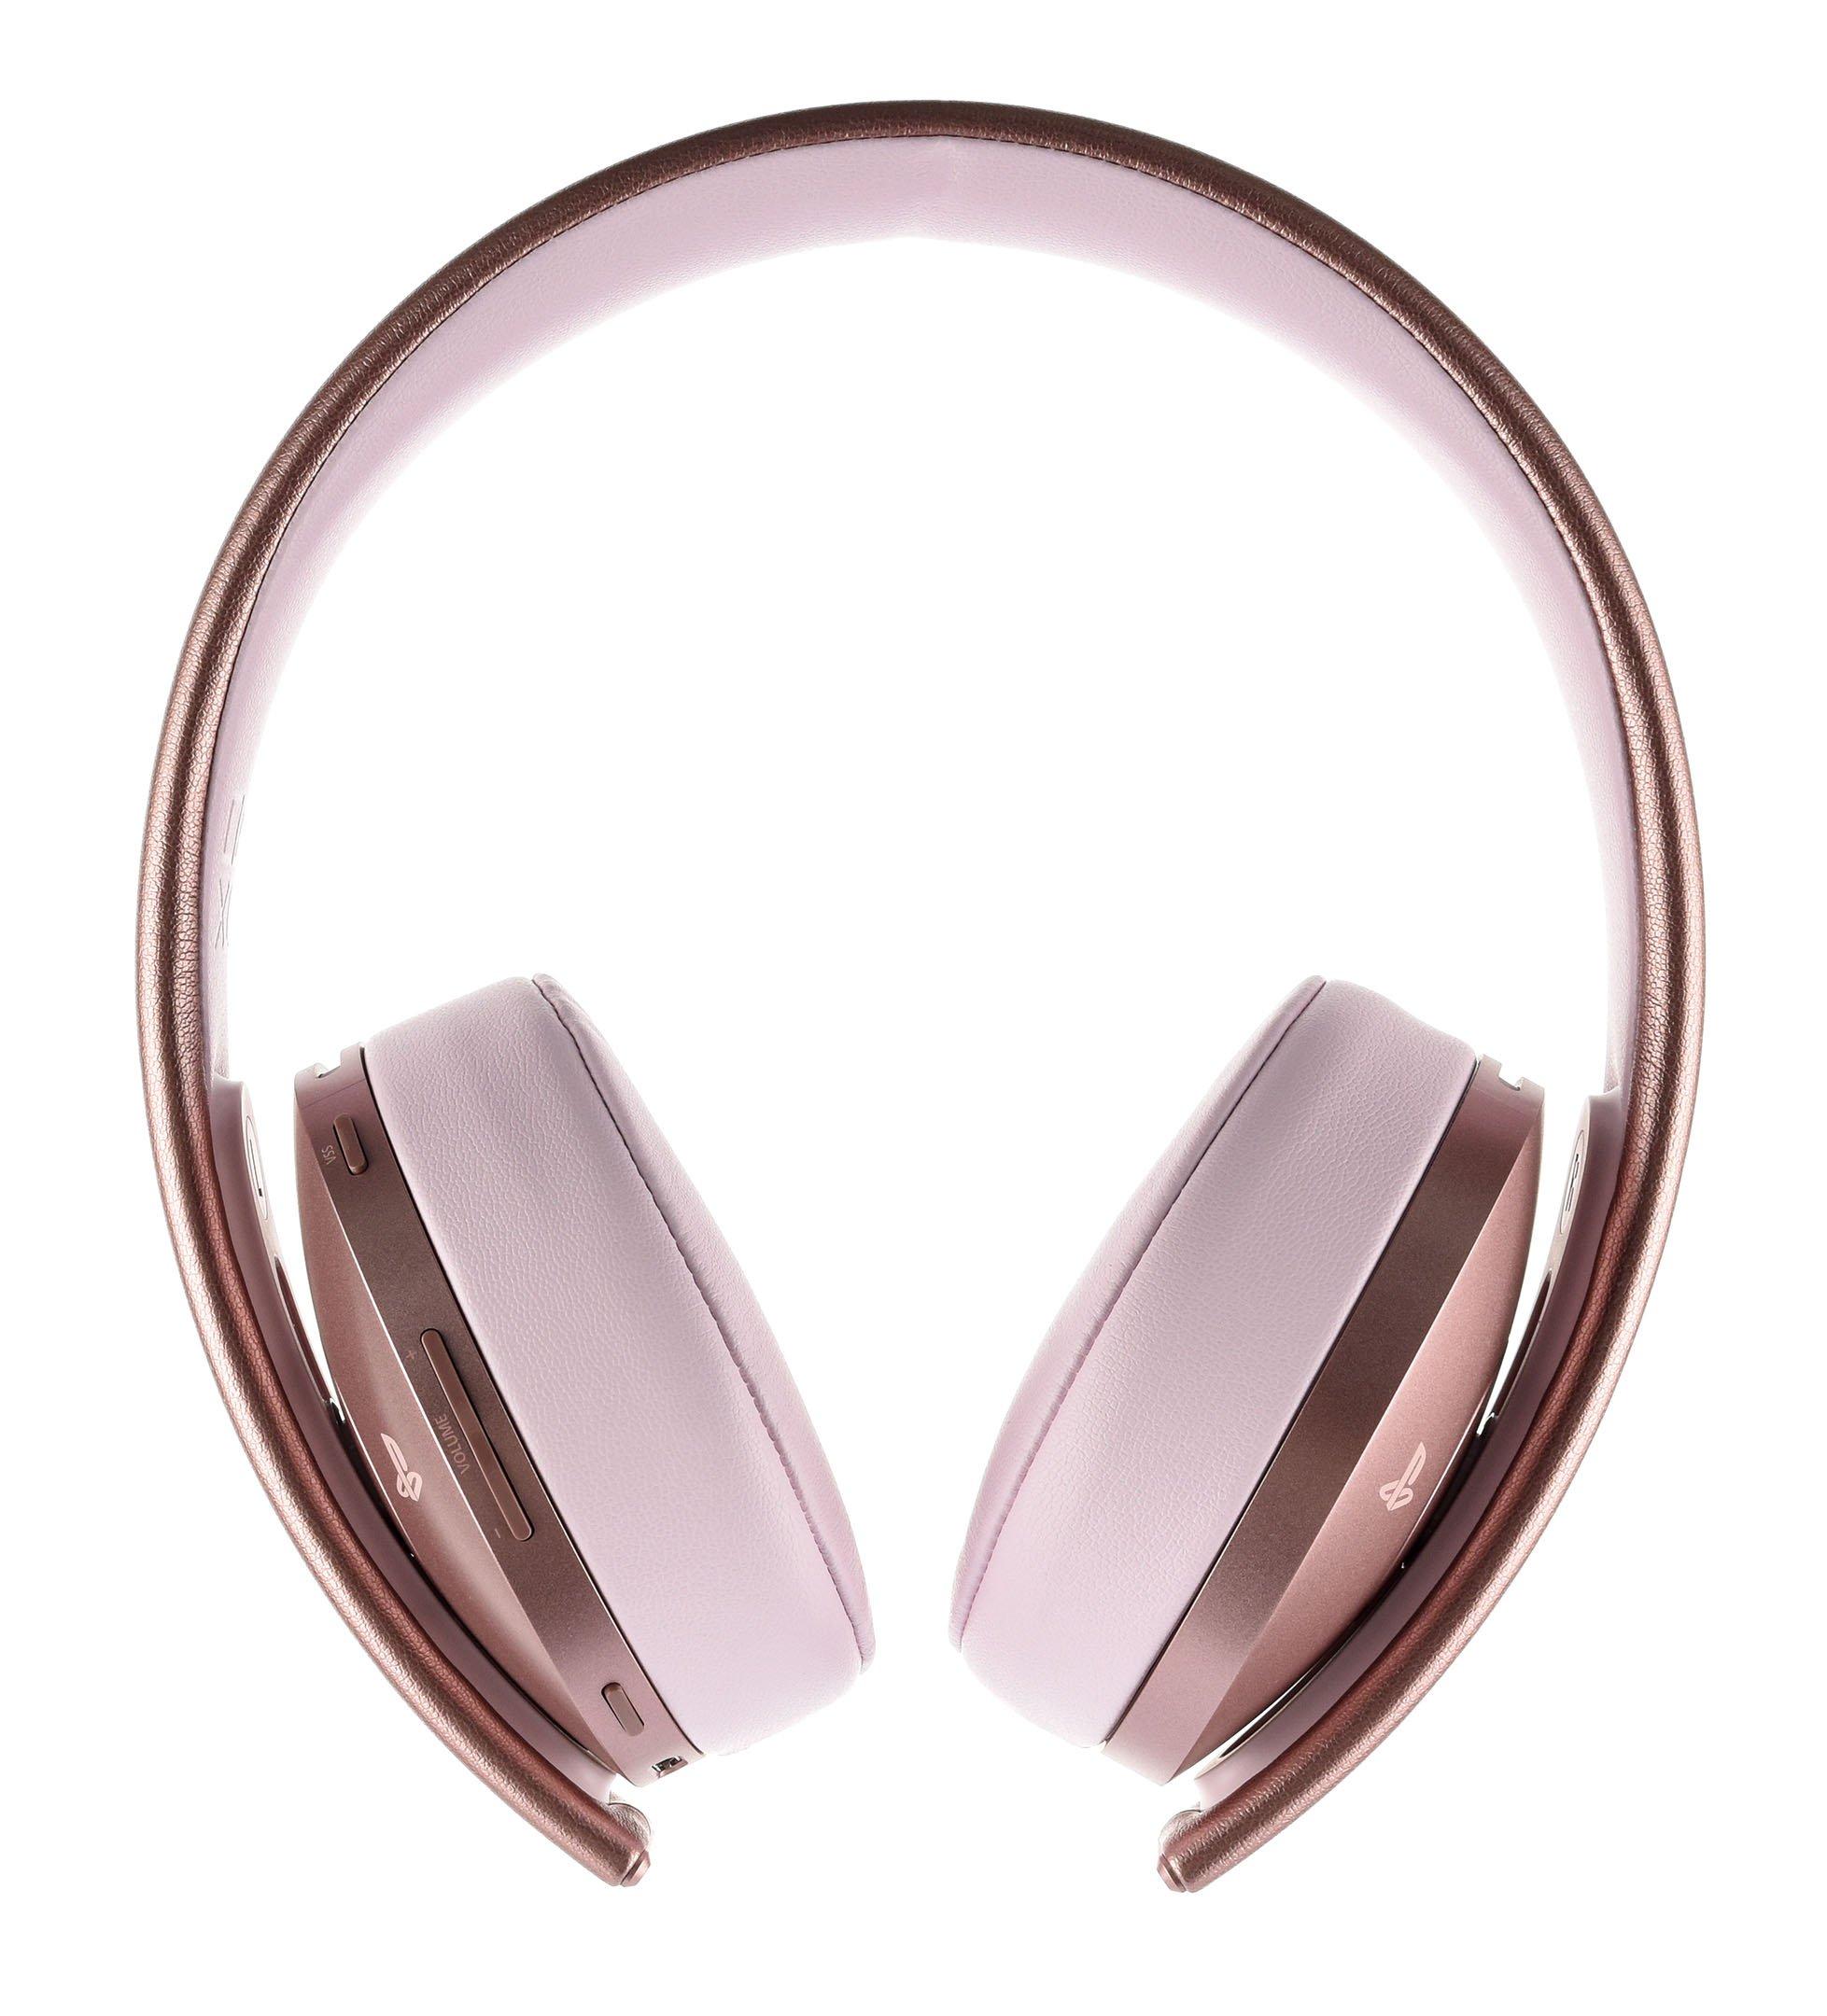 sony wireless headphones rose gold